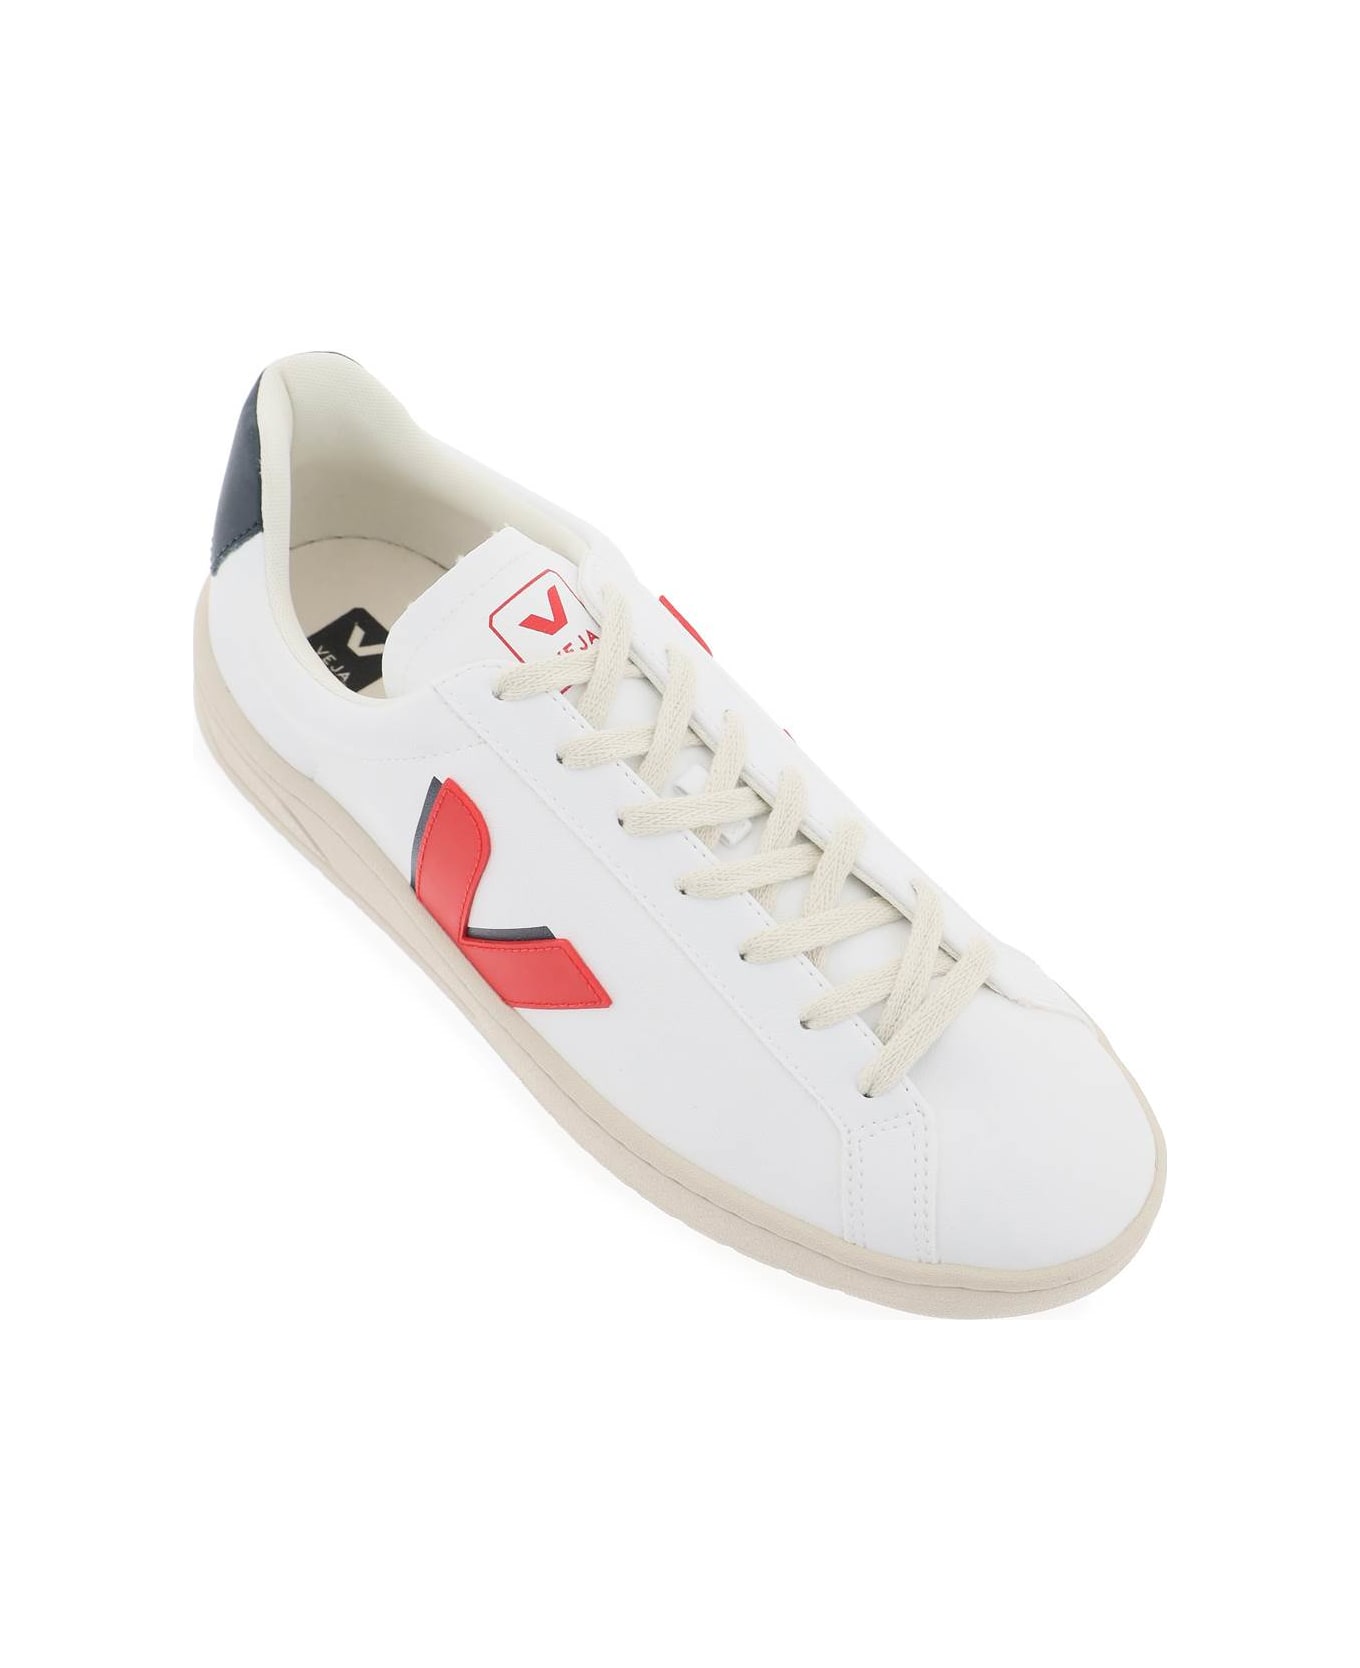 Veja C.w.l. Urca Vegan Sneakers - WHITE PEKIN NAUTICO (White)